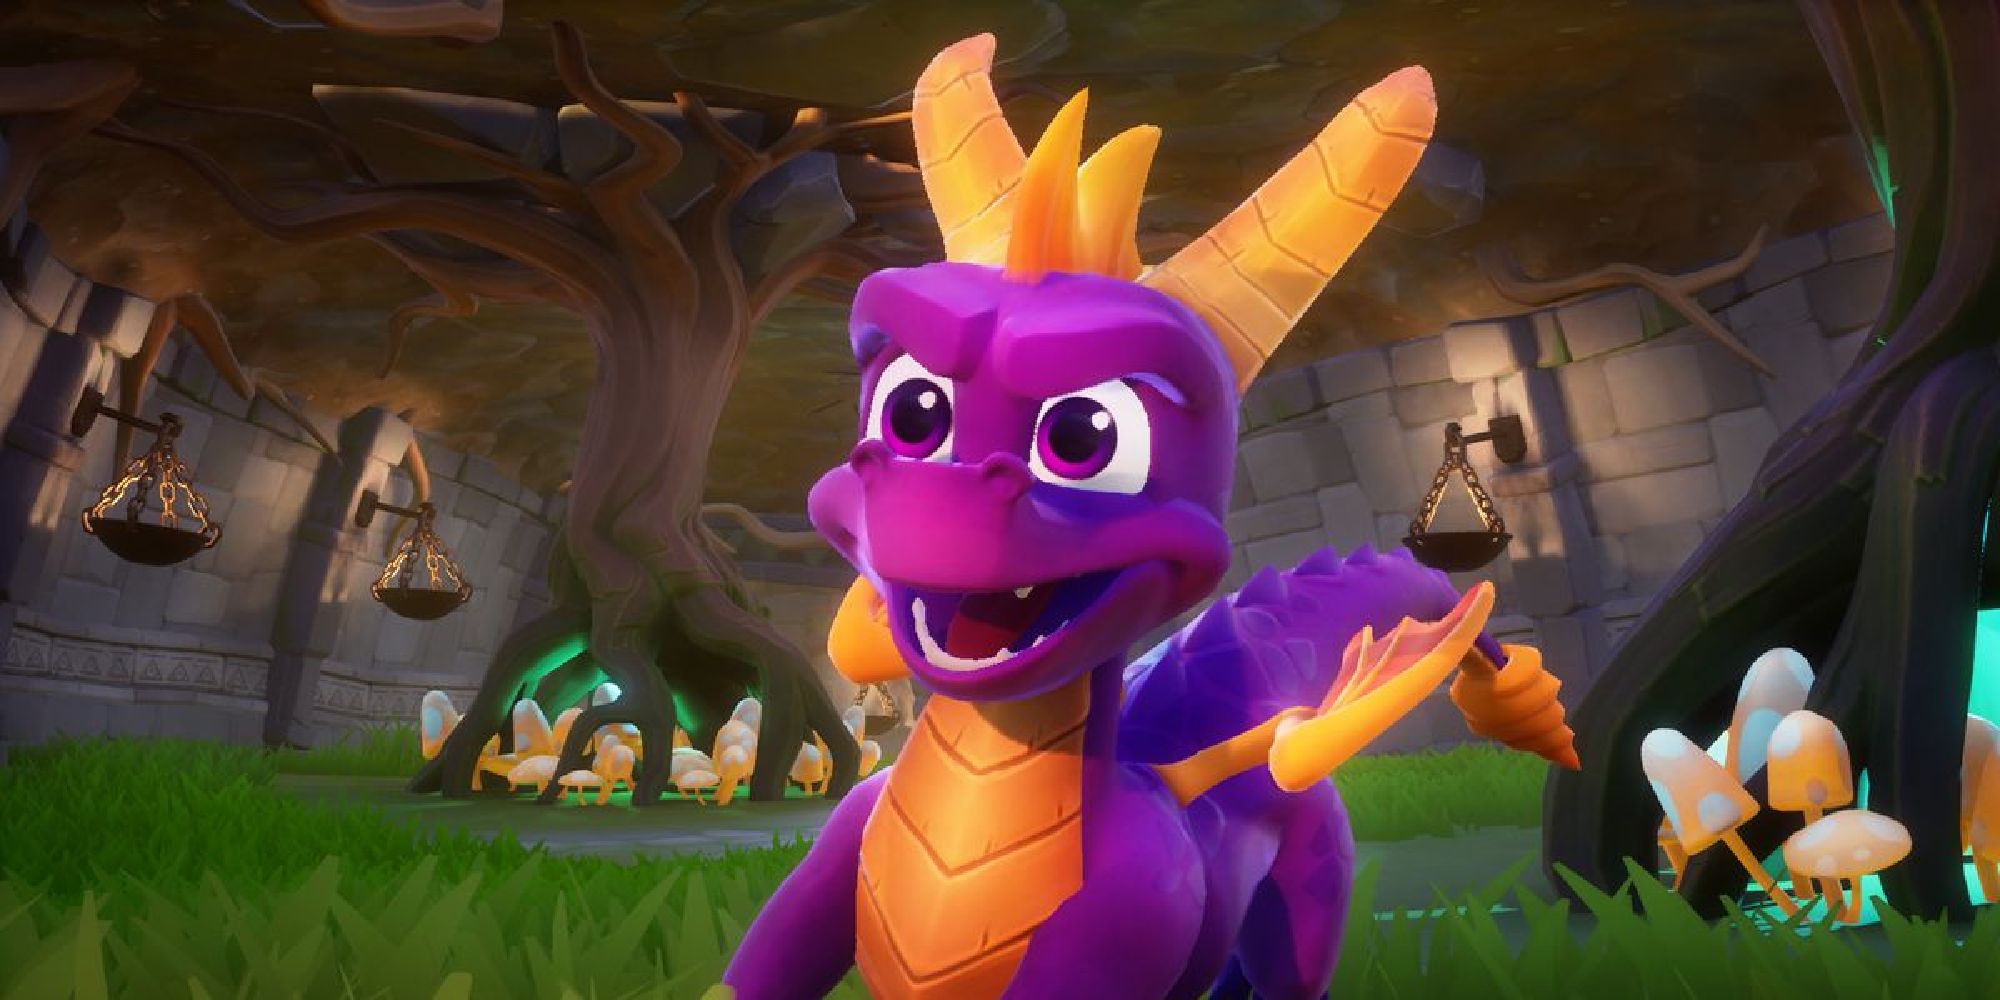 Spyro running in a castle in Spyro Reignited Trilogy